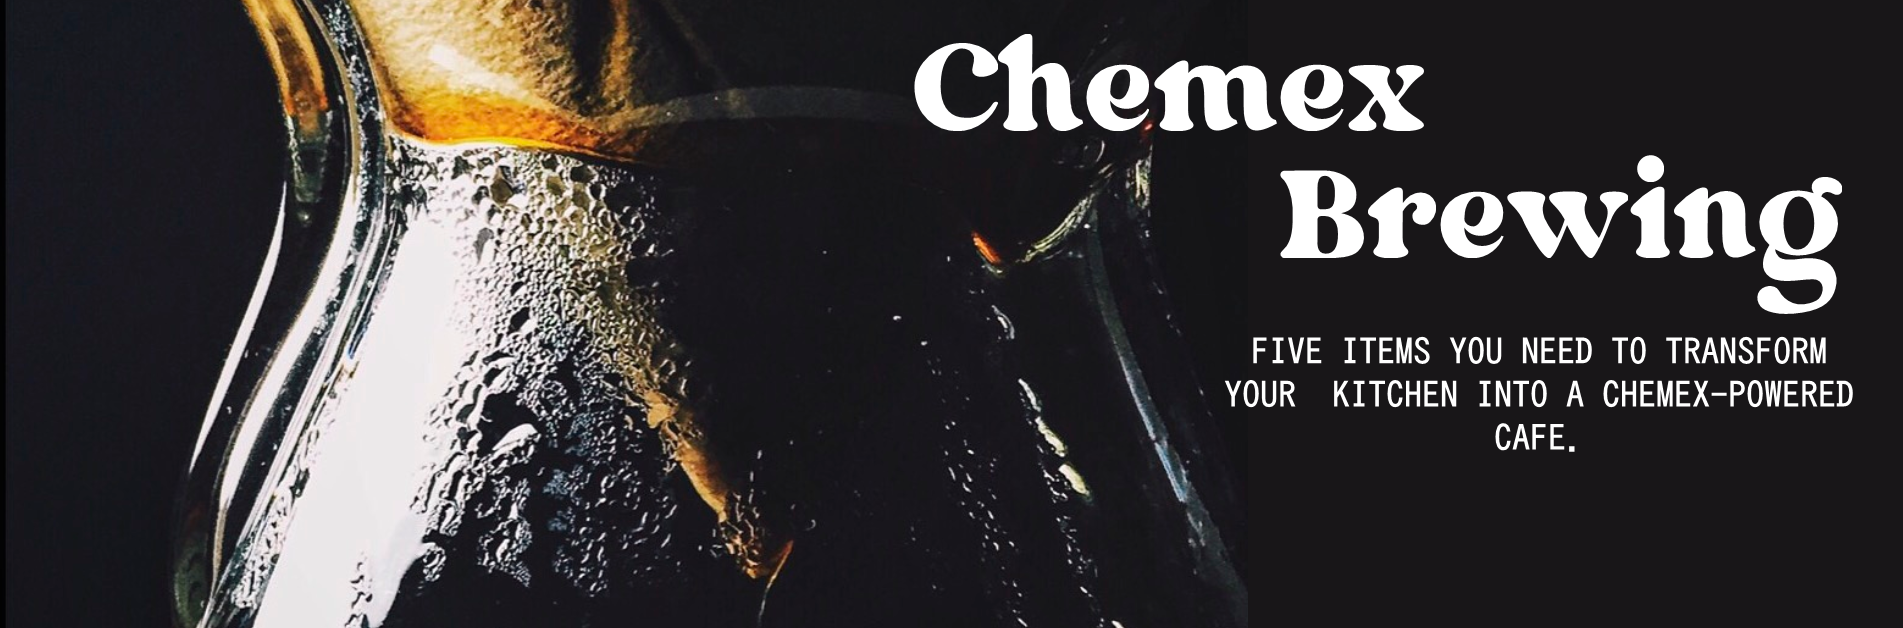 Five Items: Chemex Brewing